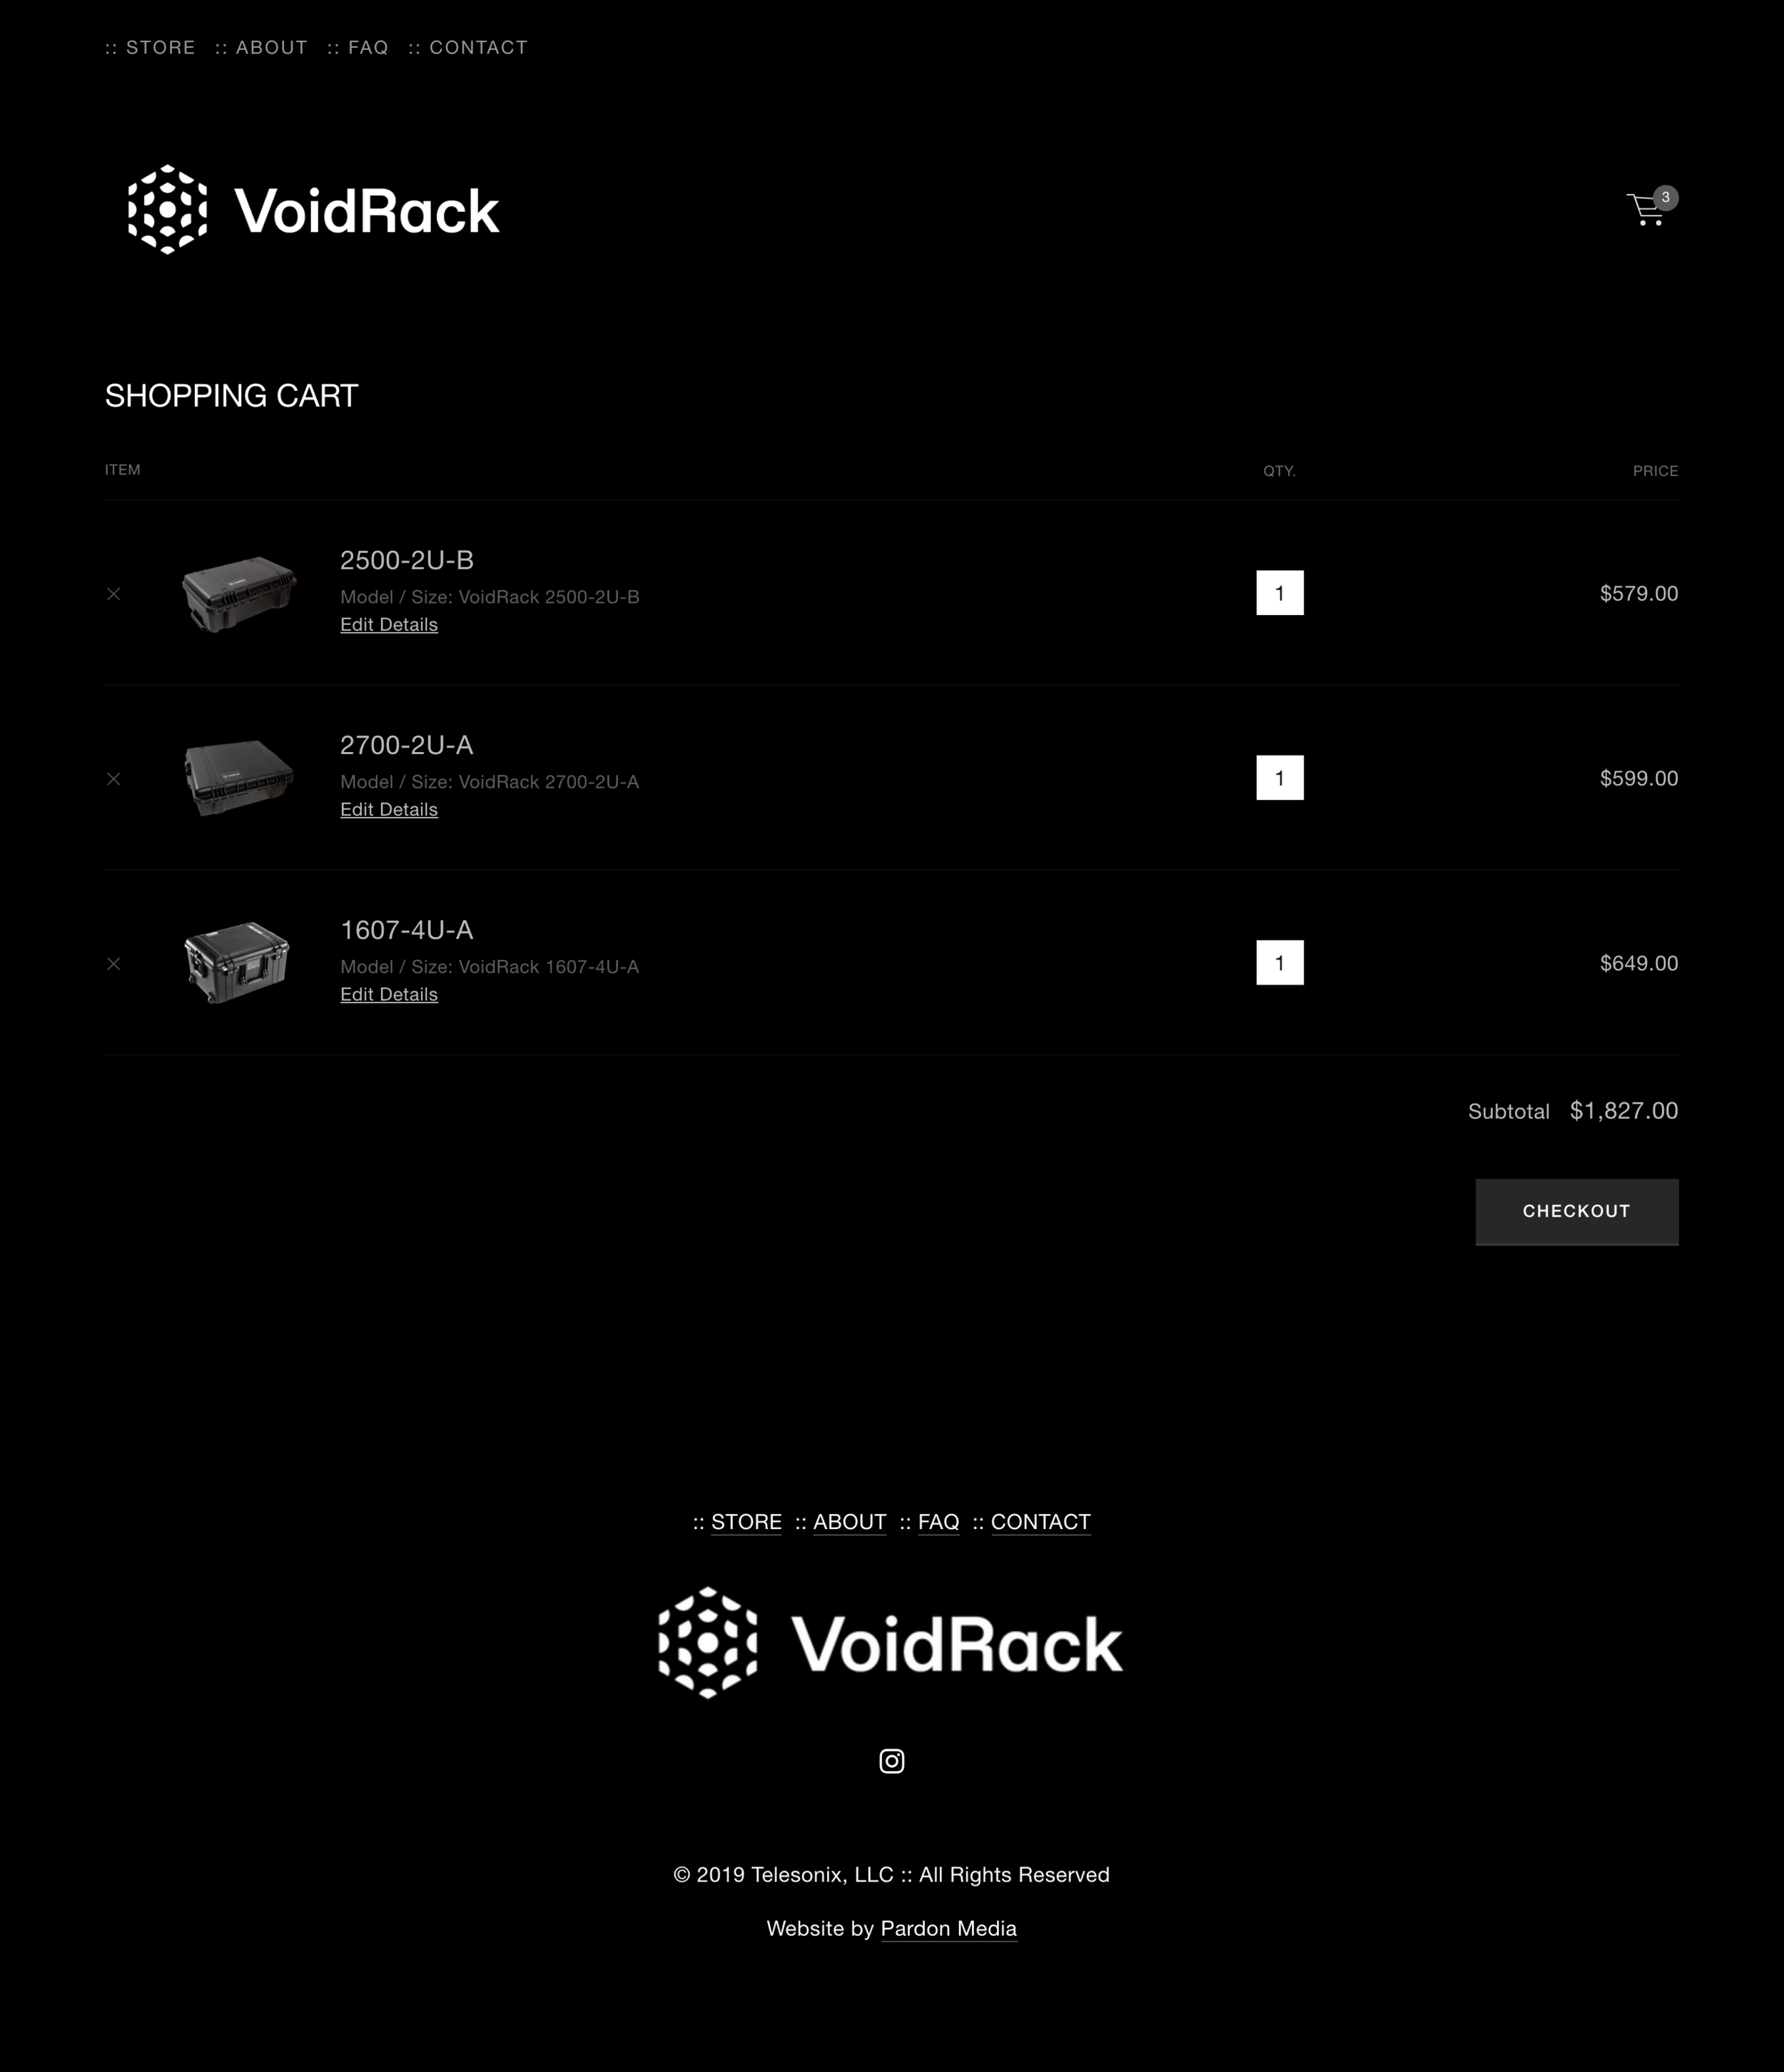 screencapture-voidrack-cart-2018-12-23-21_15_46.png